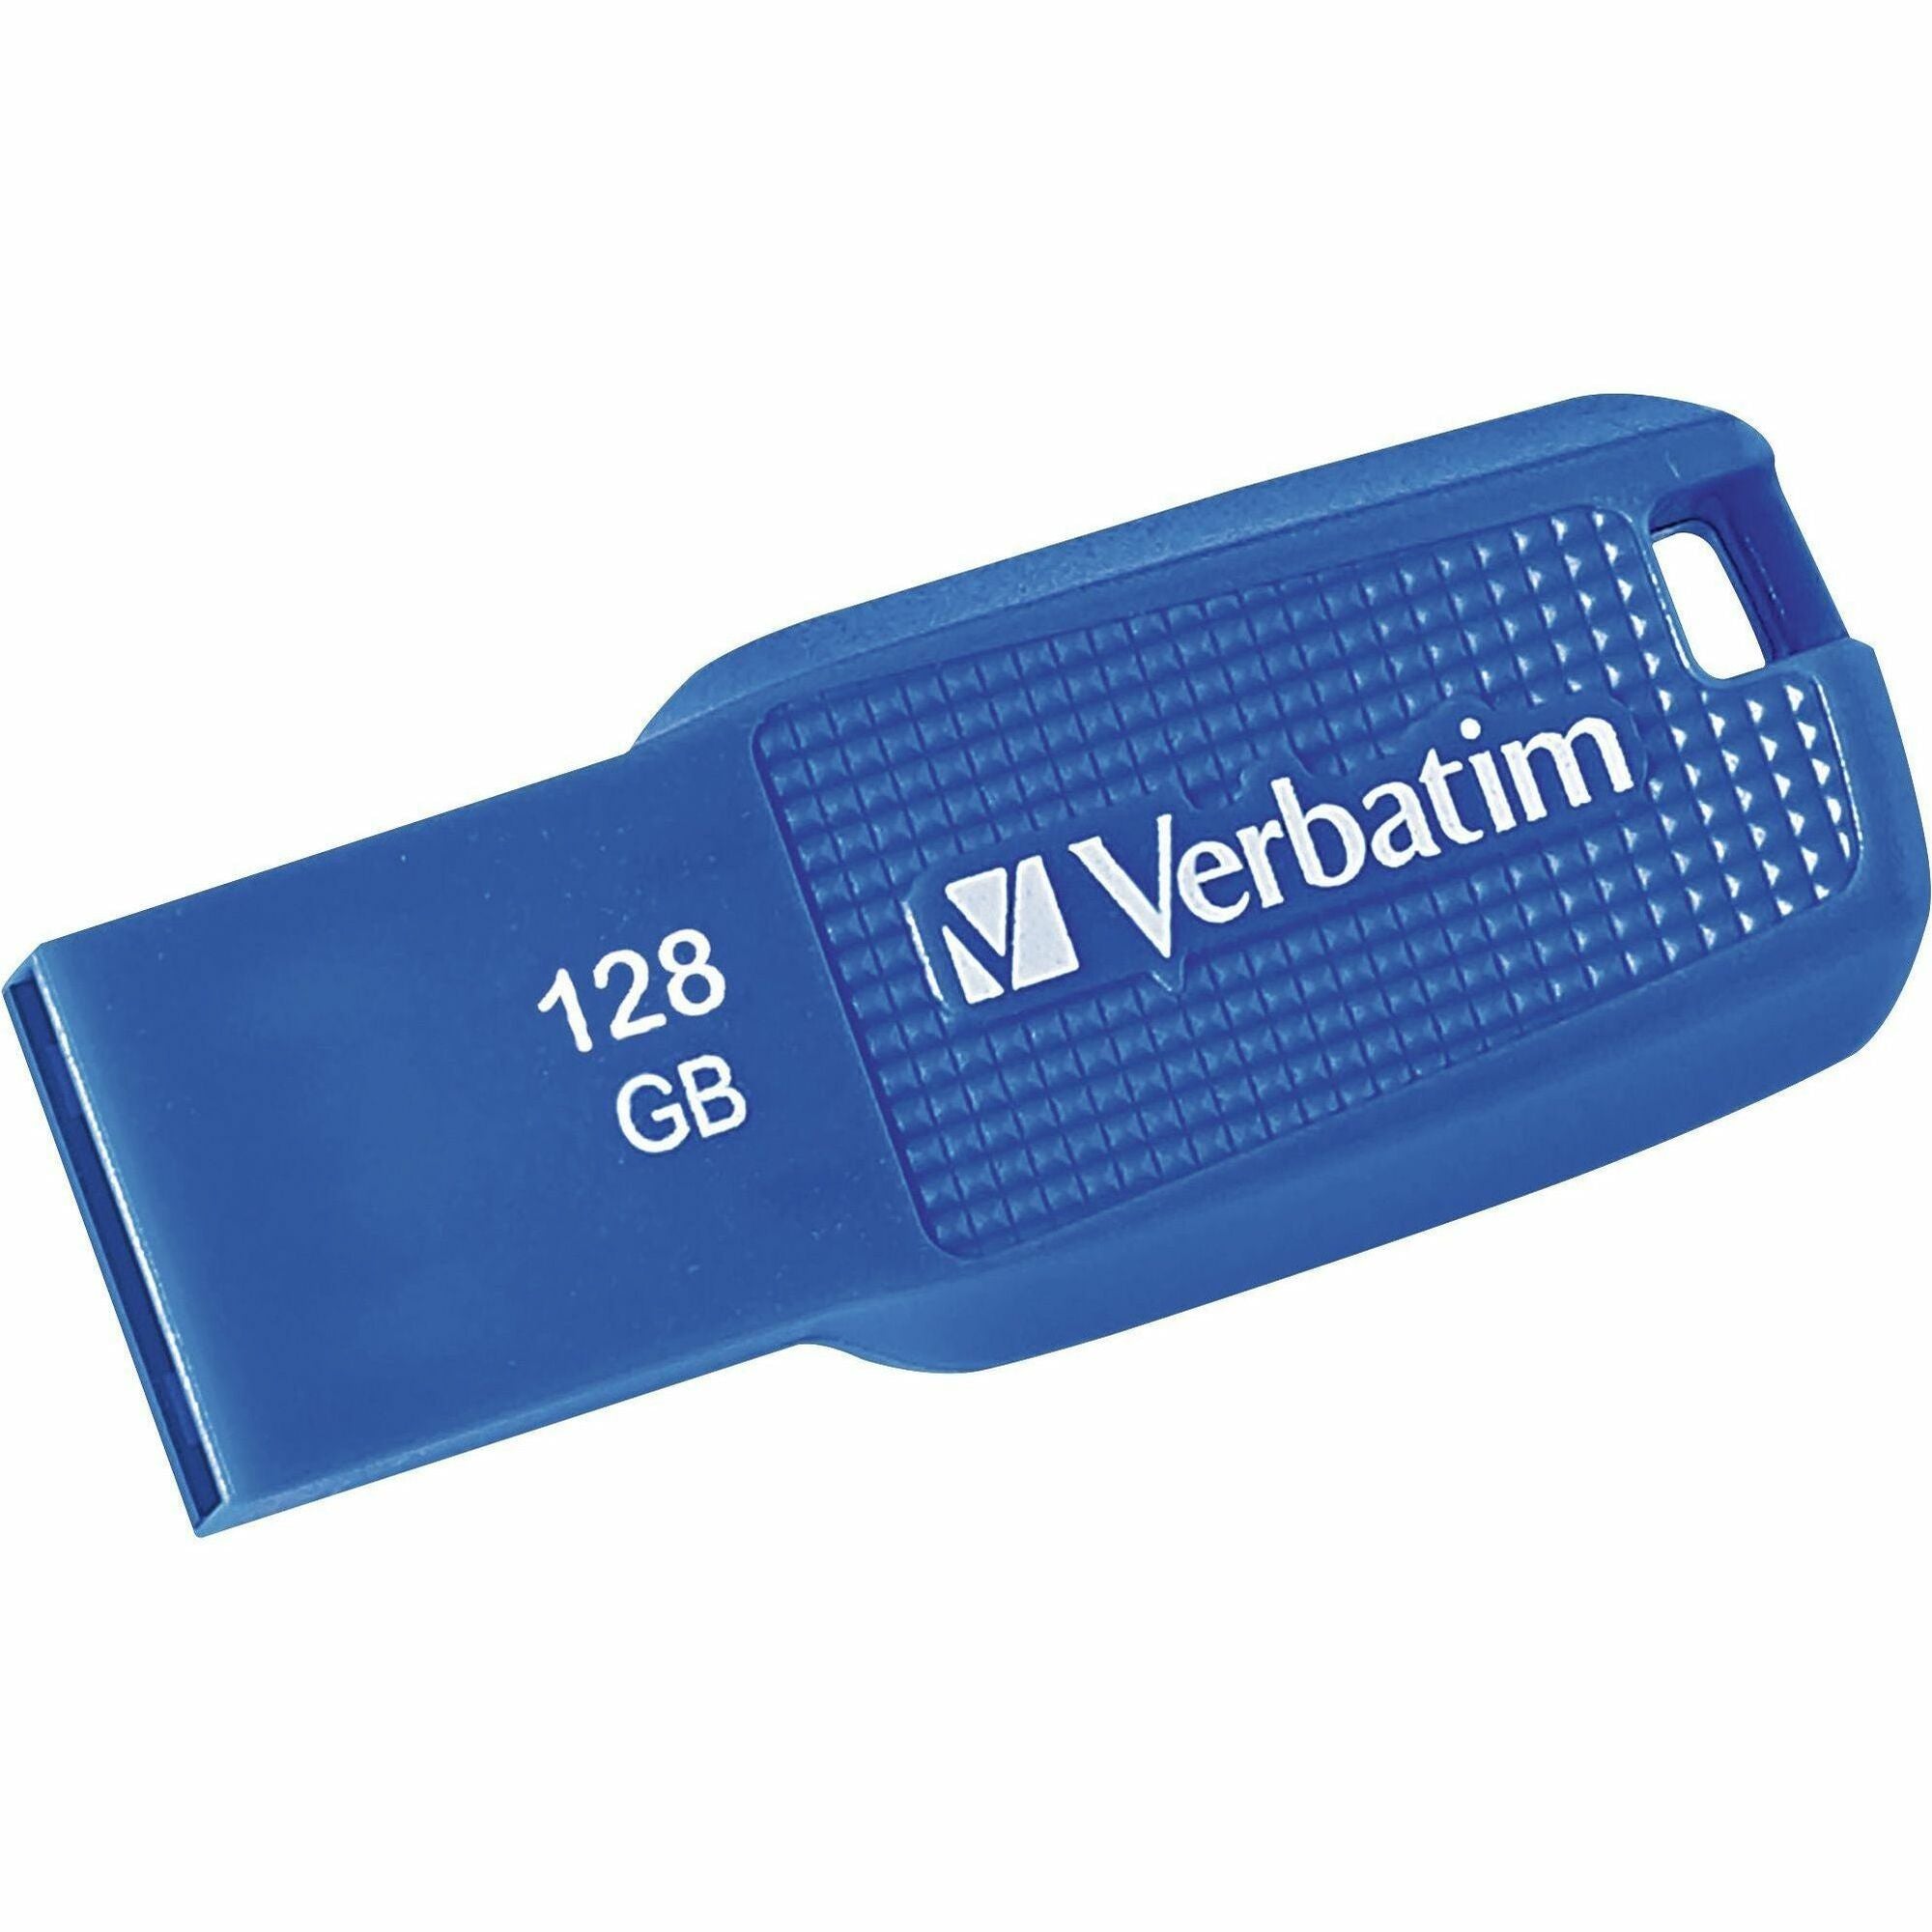 verbatim-128gb-ergo-usb-30-flash-drive-blue-the-verbatim-ergo-usb-drive-features-an-ergonomic-design-for-in-hand-comfort-and-cob-design-for-enhanced-reliability_ver70880 - 1